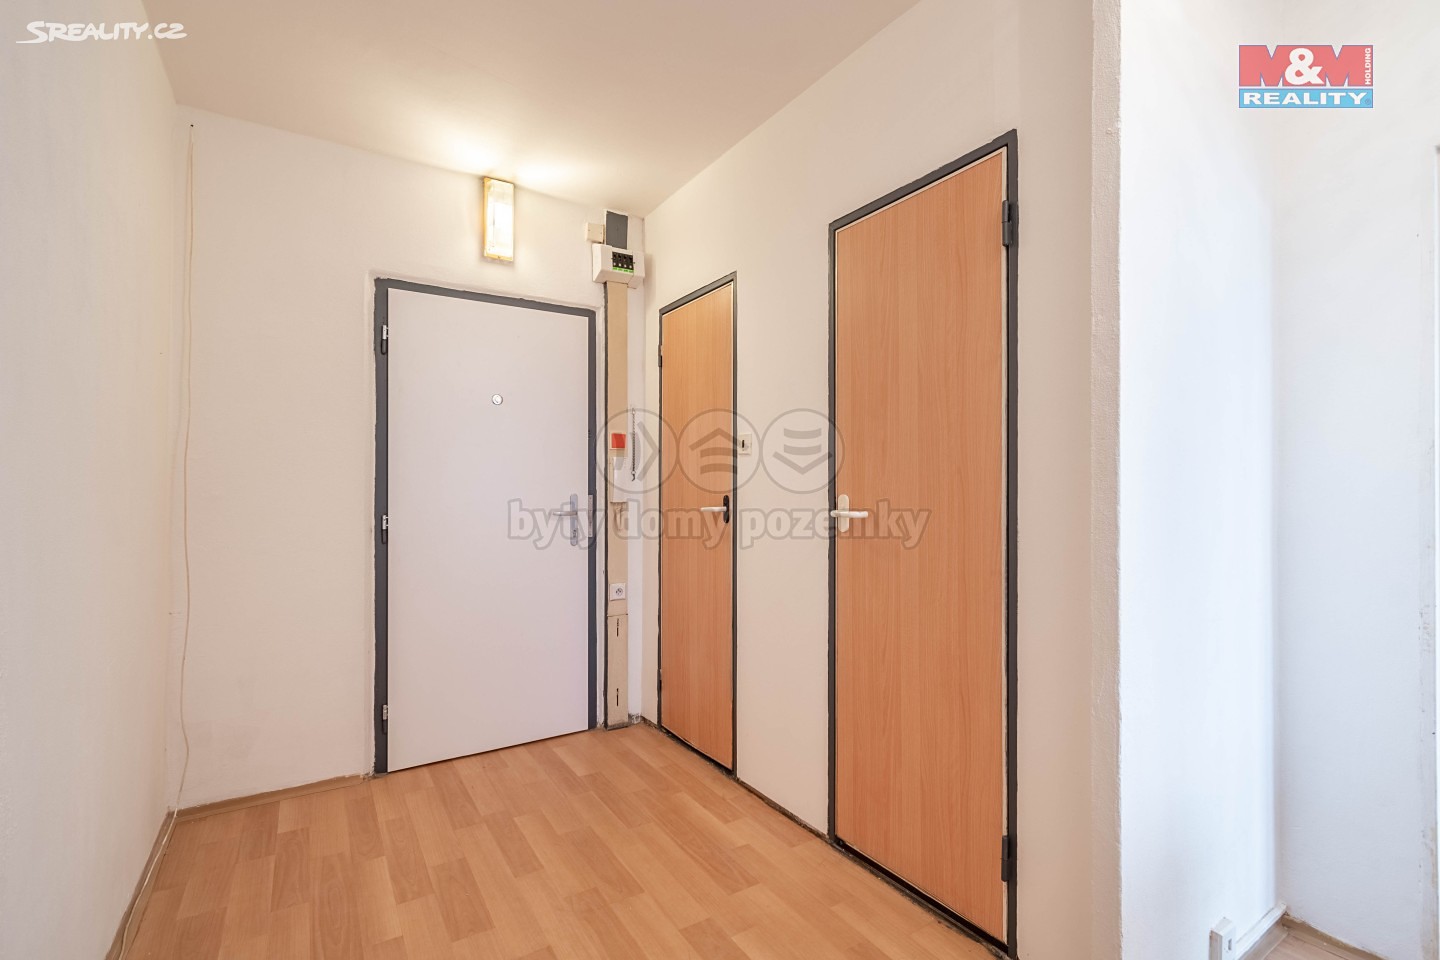 Pronájem bytu 2+kk 43 m², Modrá, Praha 5 - Stodůlky